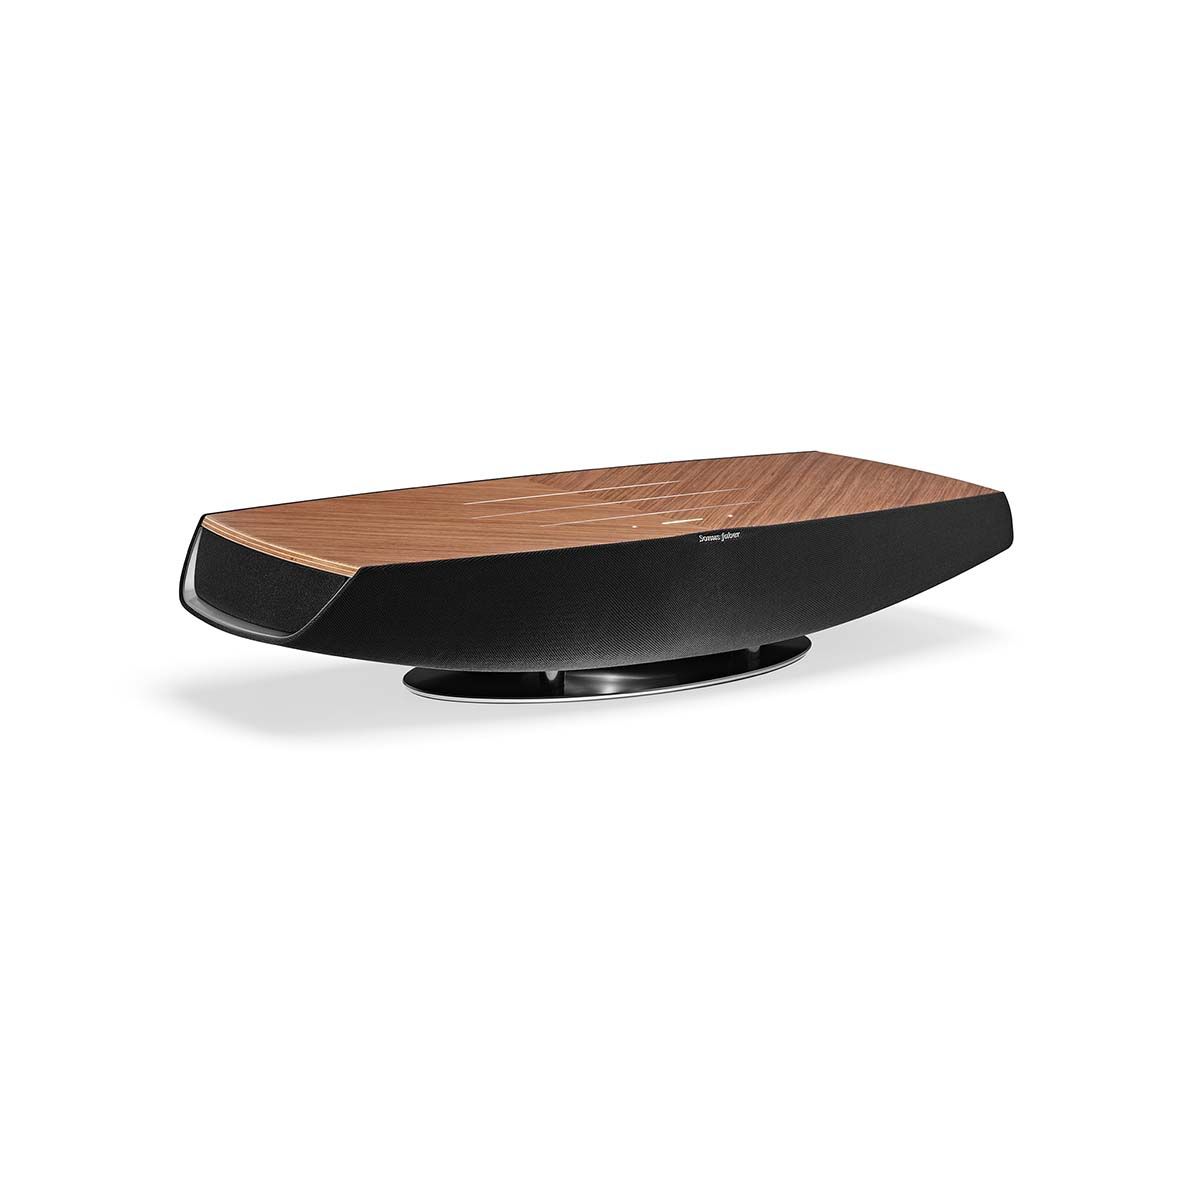 Sonus Faber Omnia Wireless Smart Speaker, Walnut, front angled view